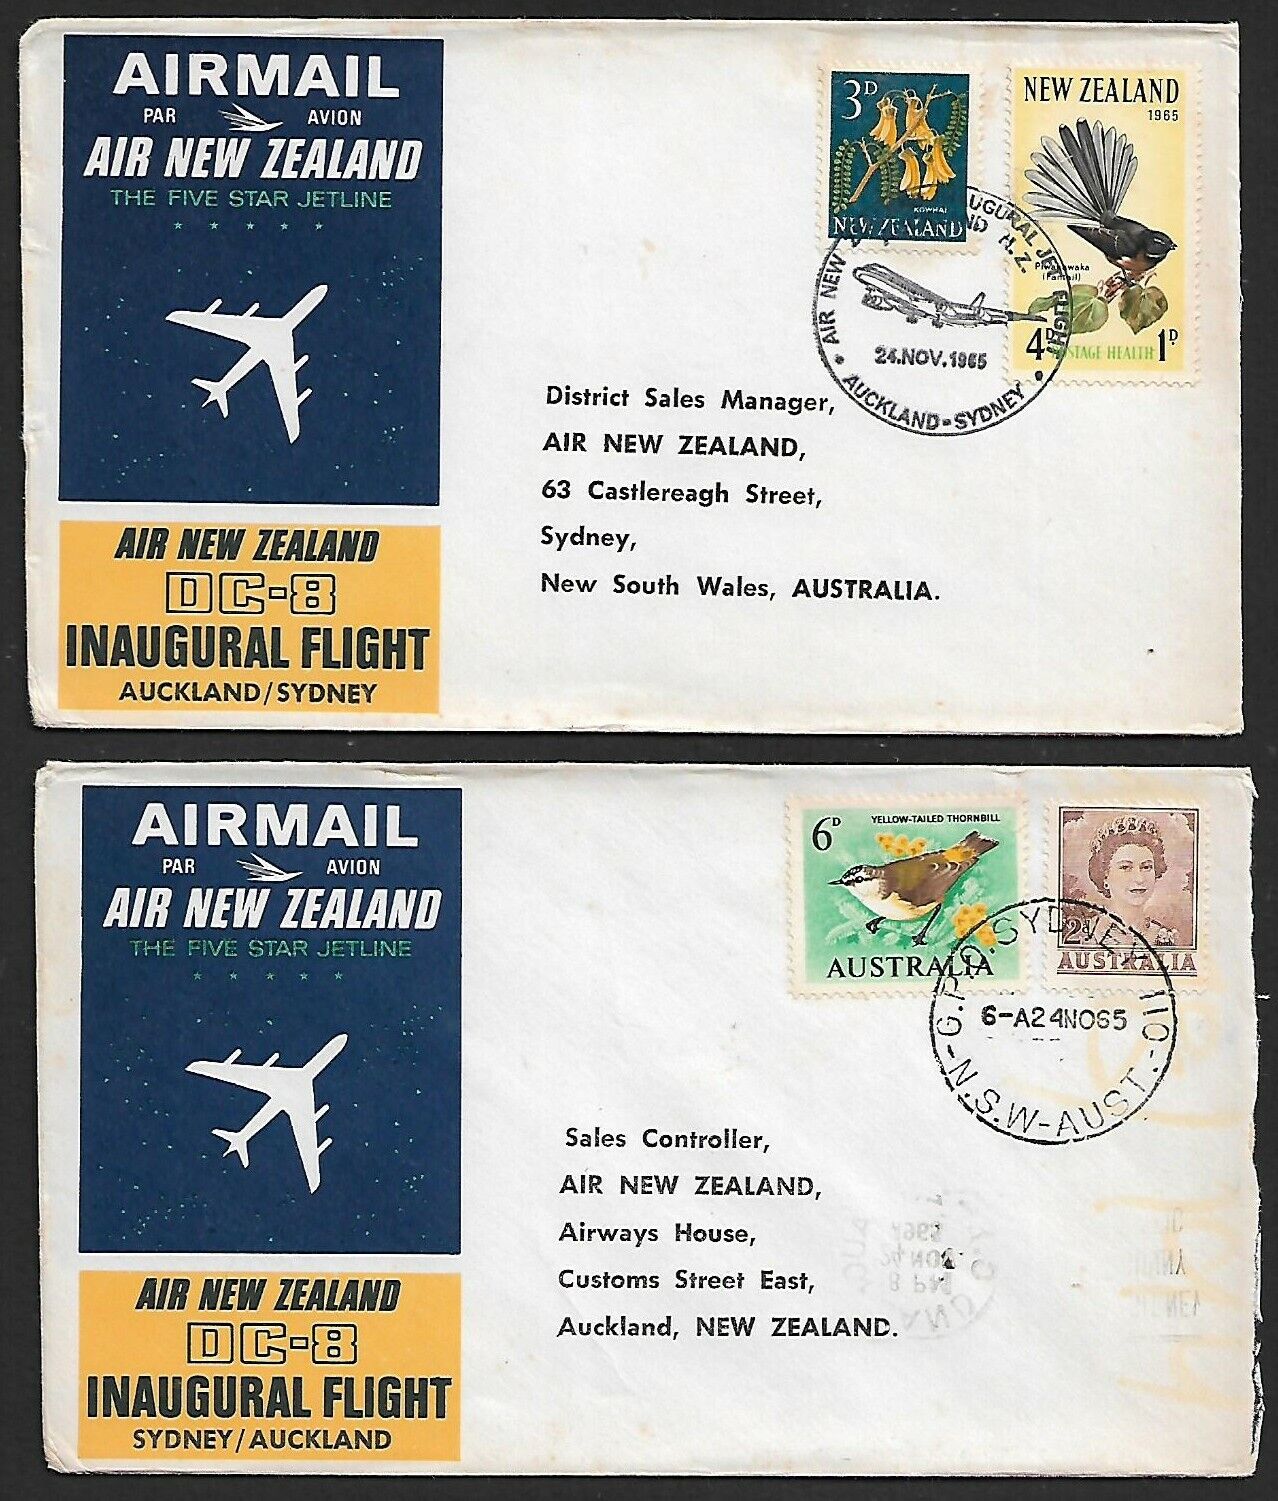 Air New Zealand 1965 First Flight Covers Auckland – Sydney & Return